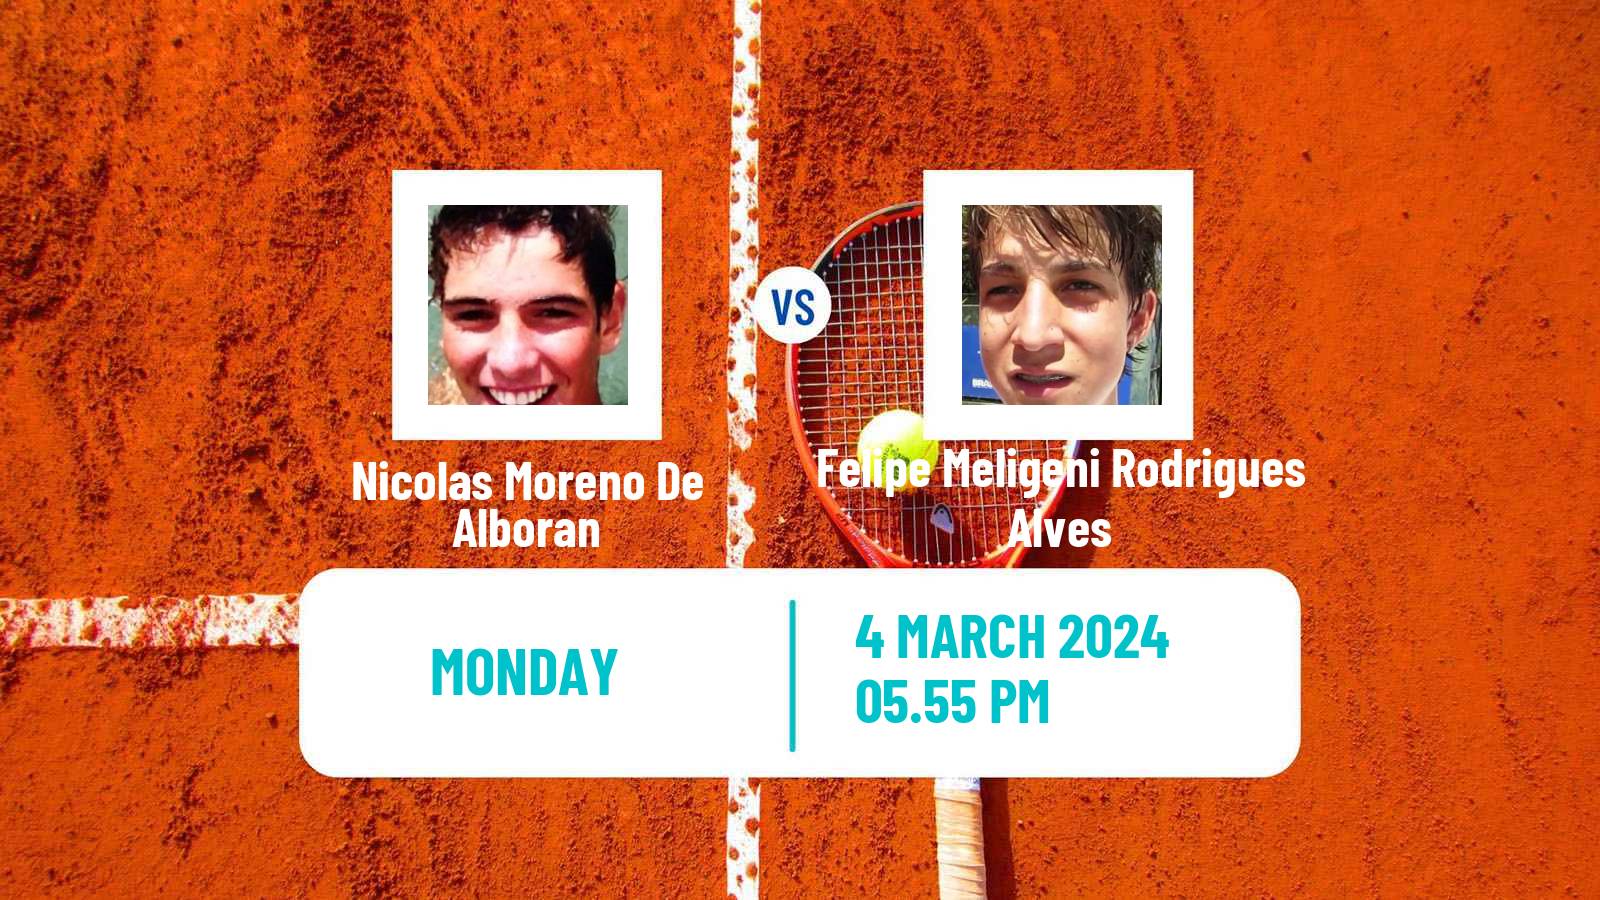 Tennis ATP Indian Wells Nicolas Moreno De Alboran - Felipe Meligeni Rodrigues Alves